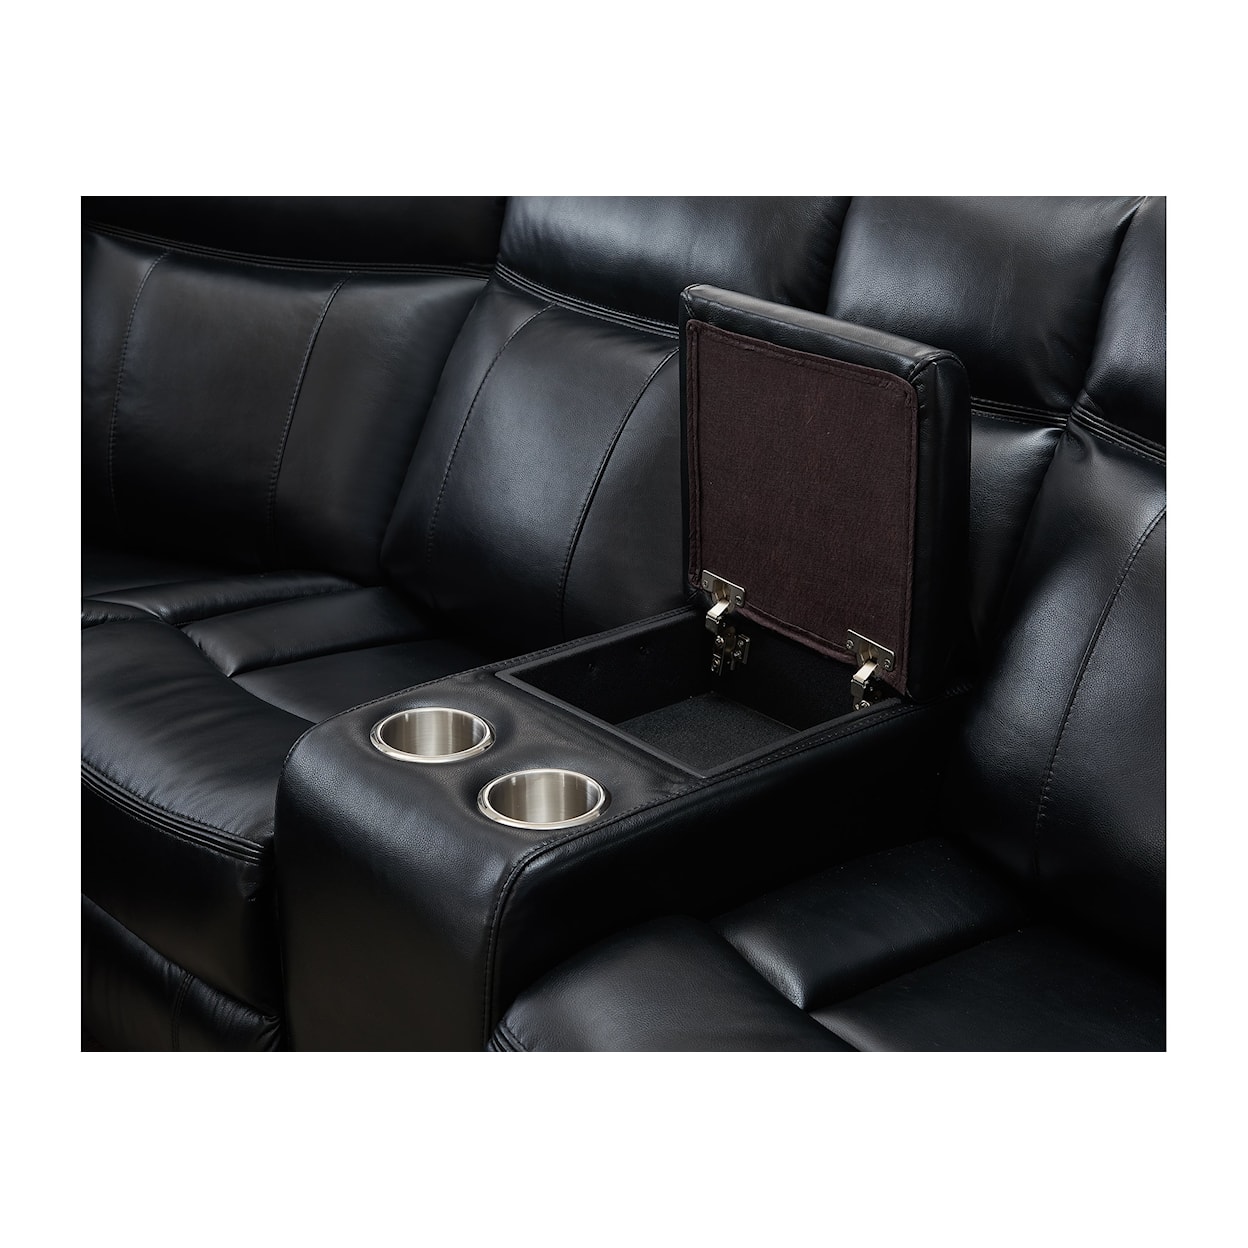 Global Furniture UM02 Black Sectional Sofa